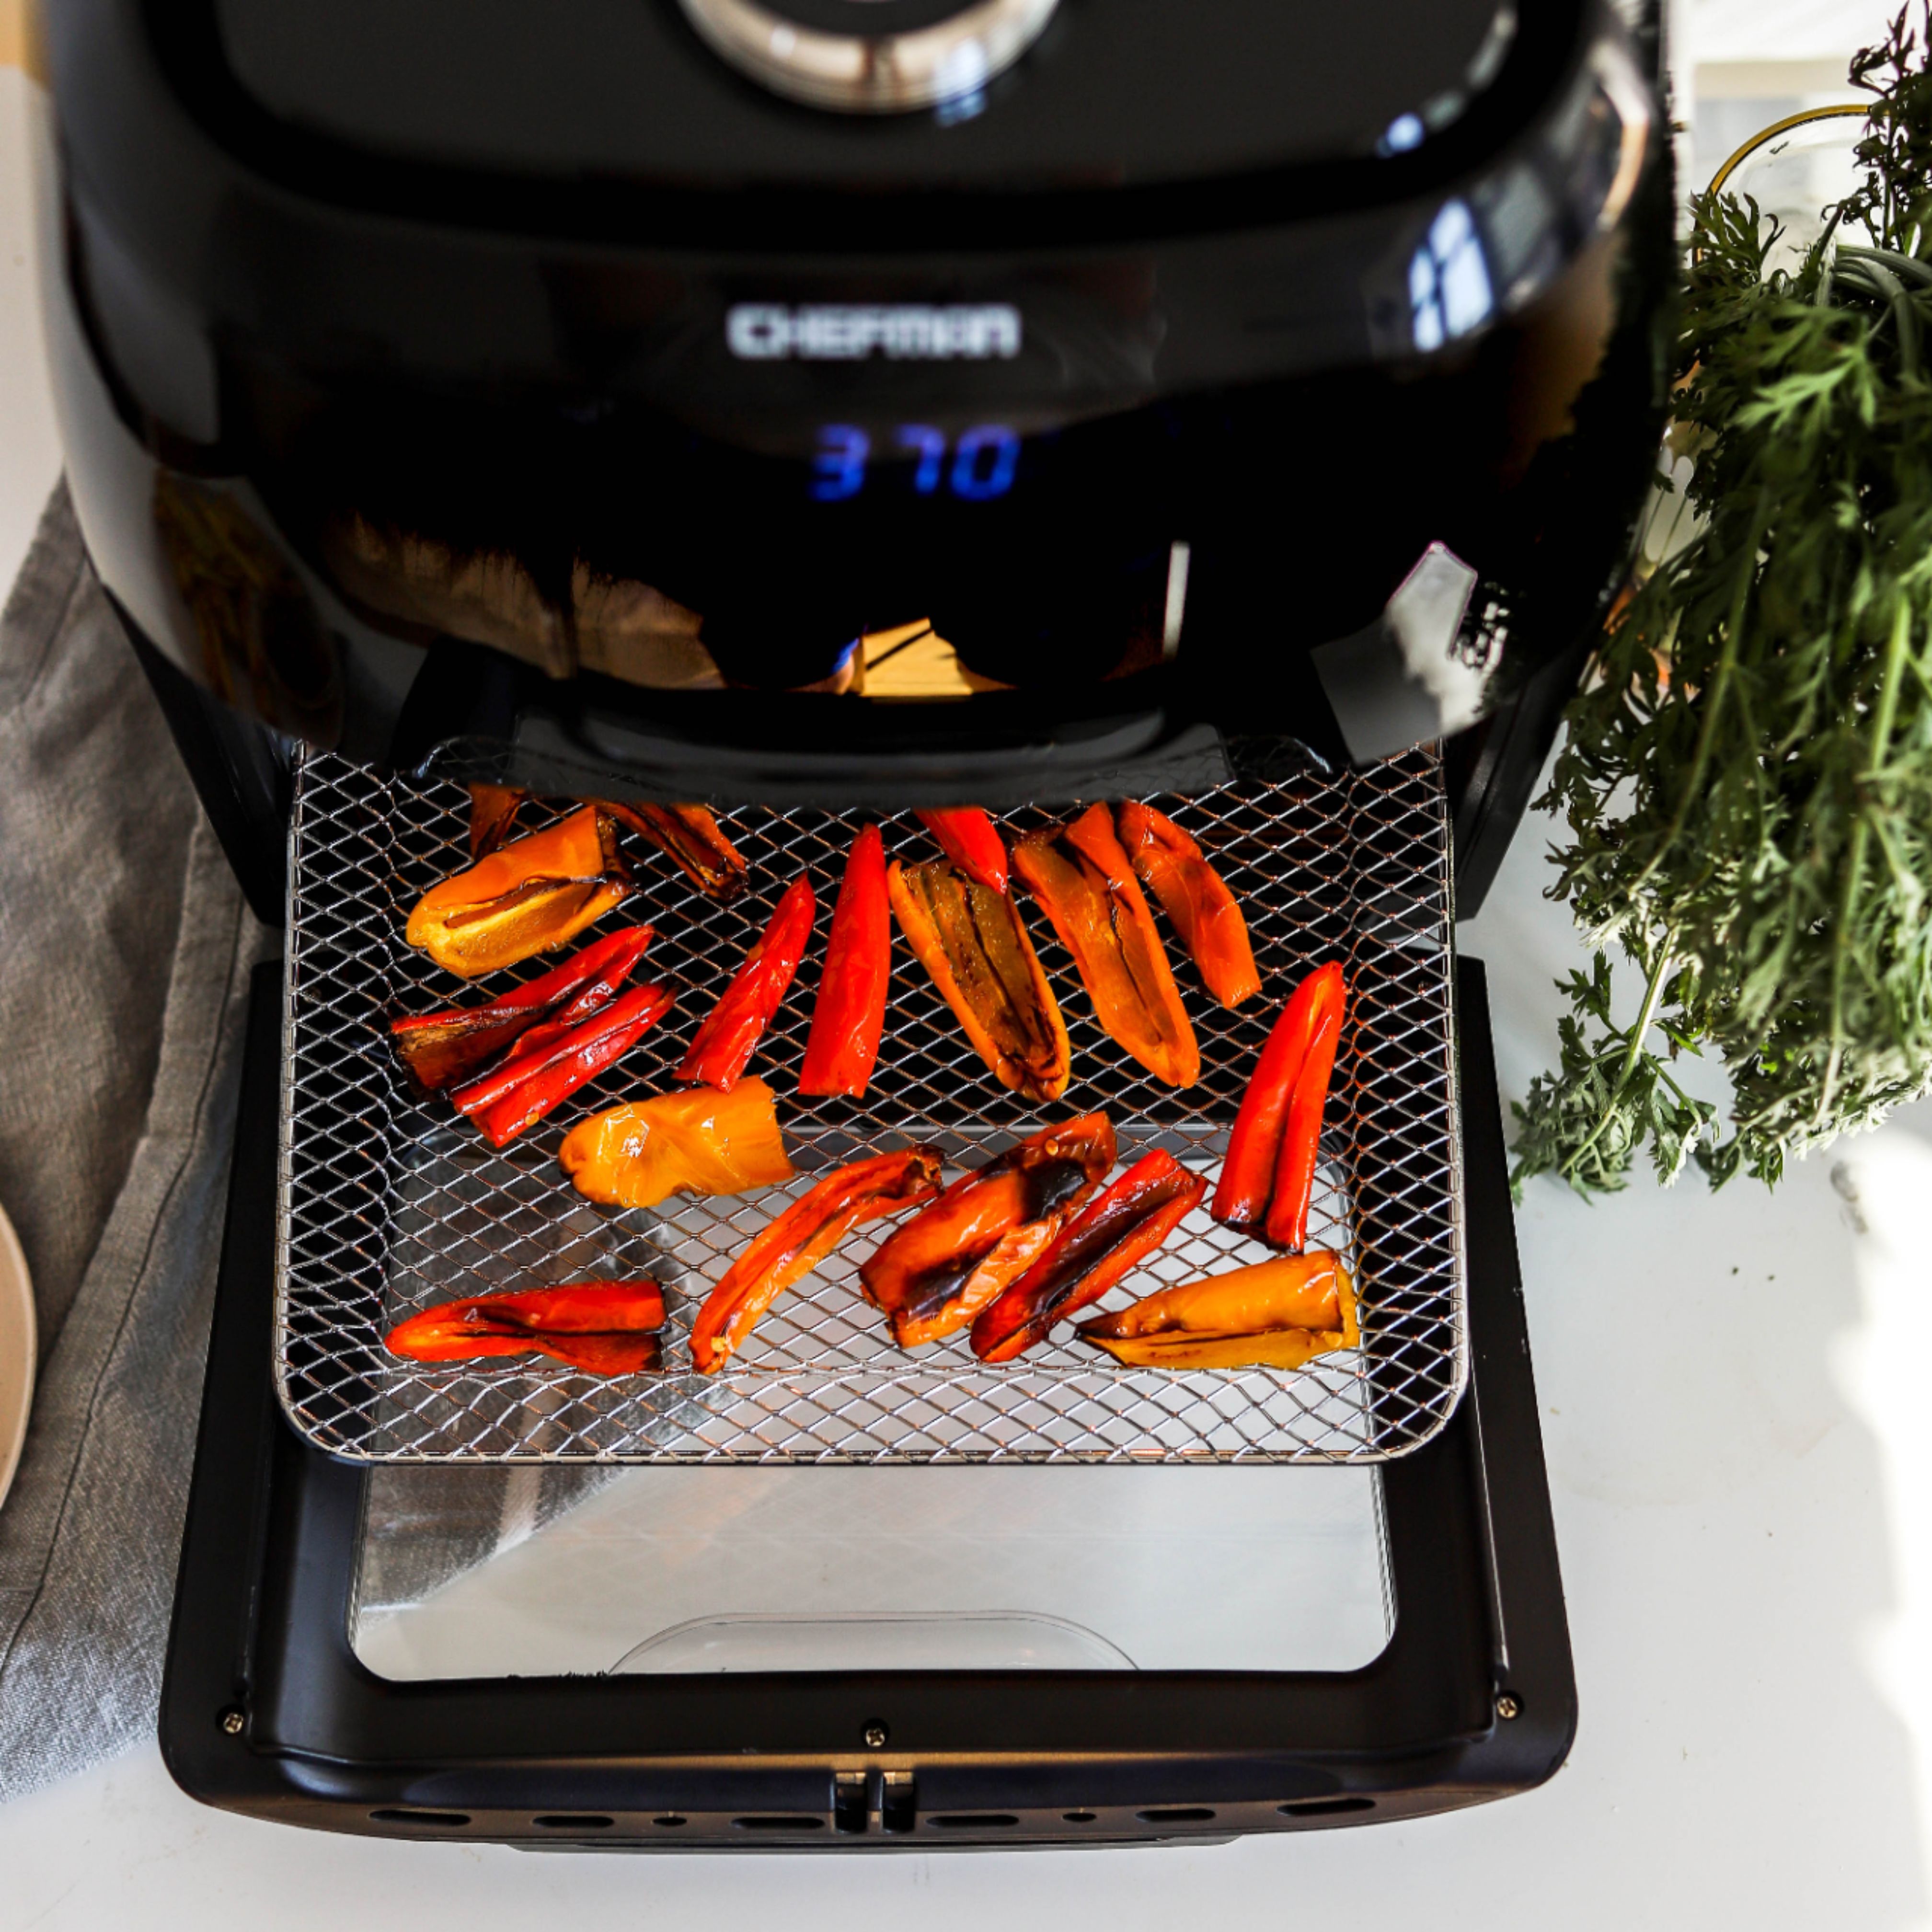 Chefman Digital Air Fryer + Rotisserie Oven, 6.3 Qt Capacity,  Multi-Function, Black 